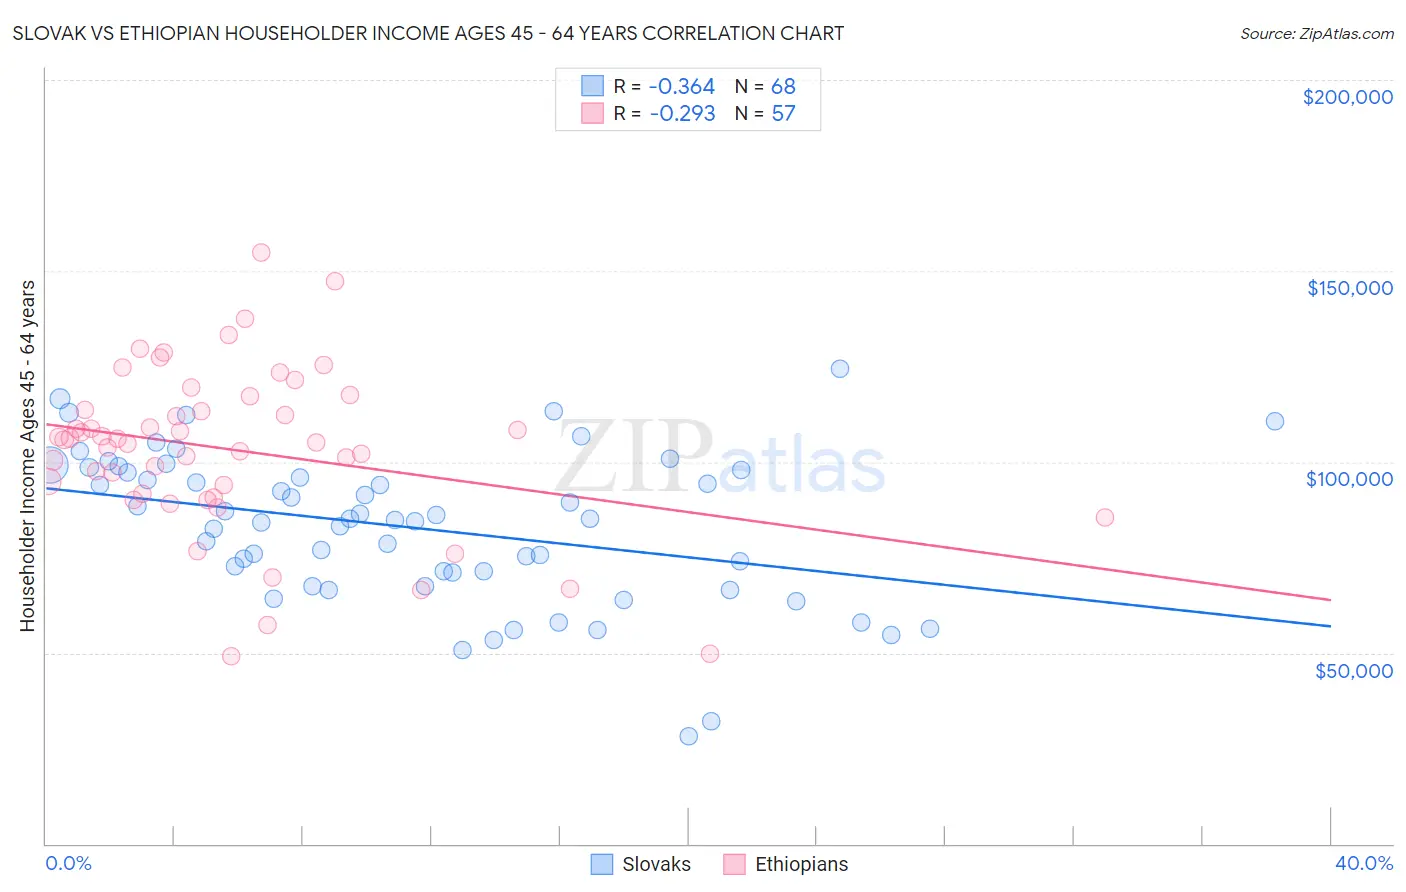 Slovak vs Ethiopian Householder Income Ages 45 - 64 years